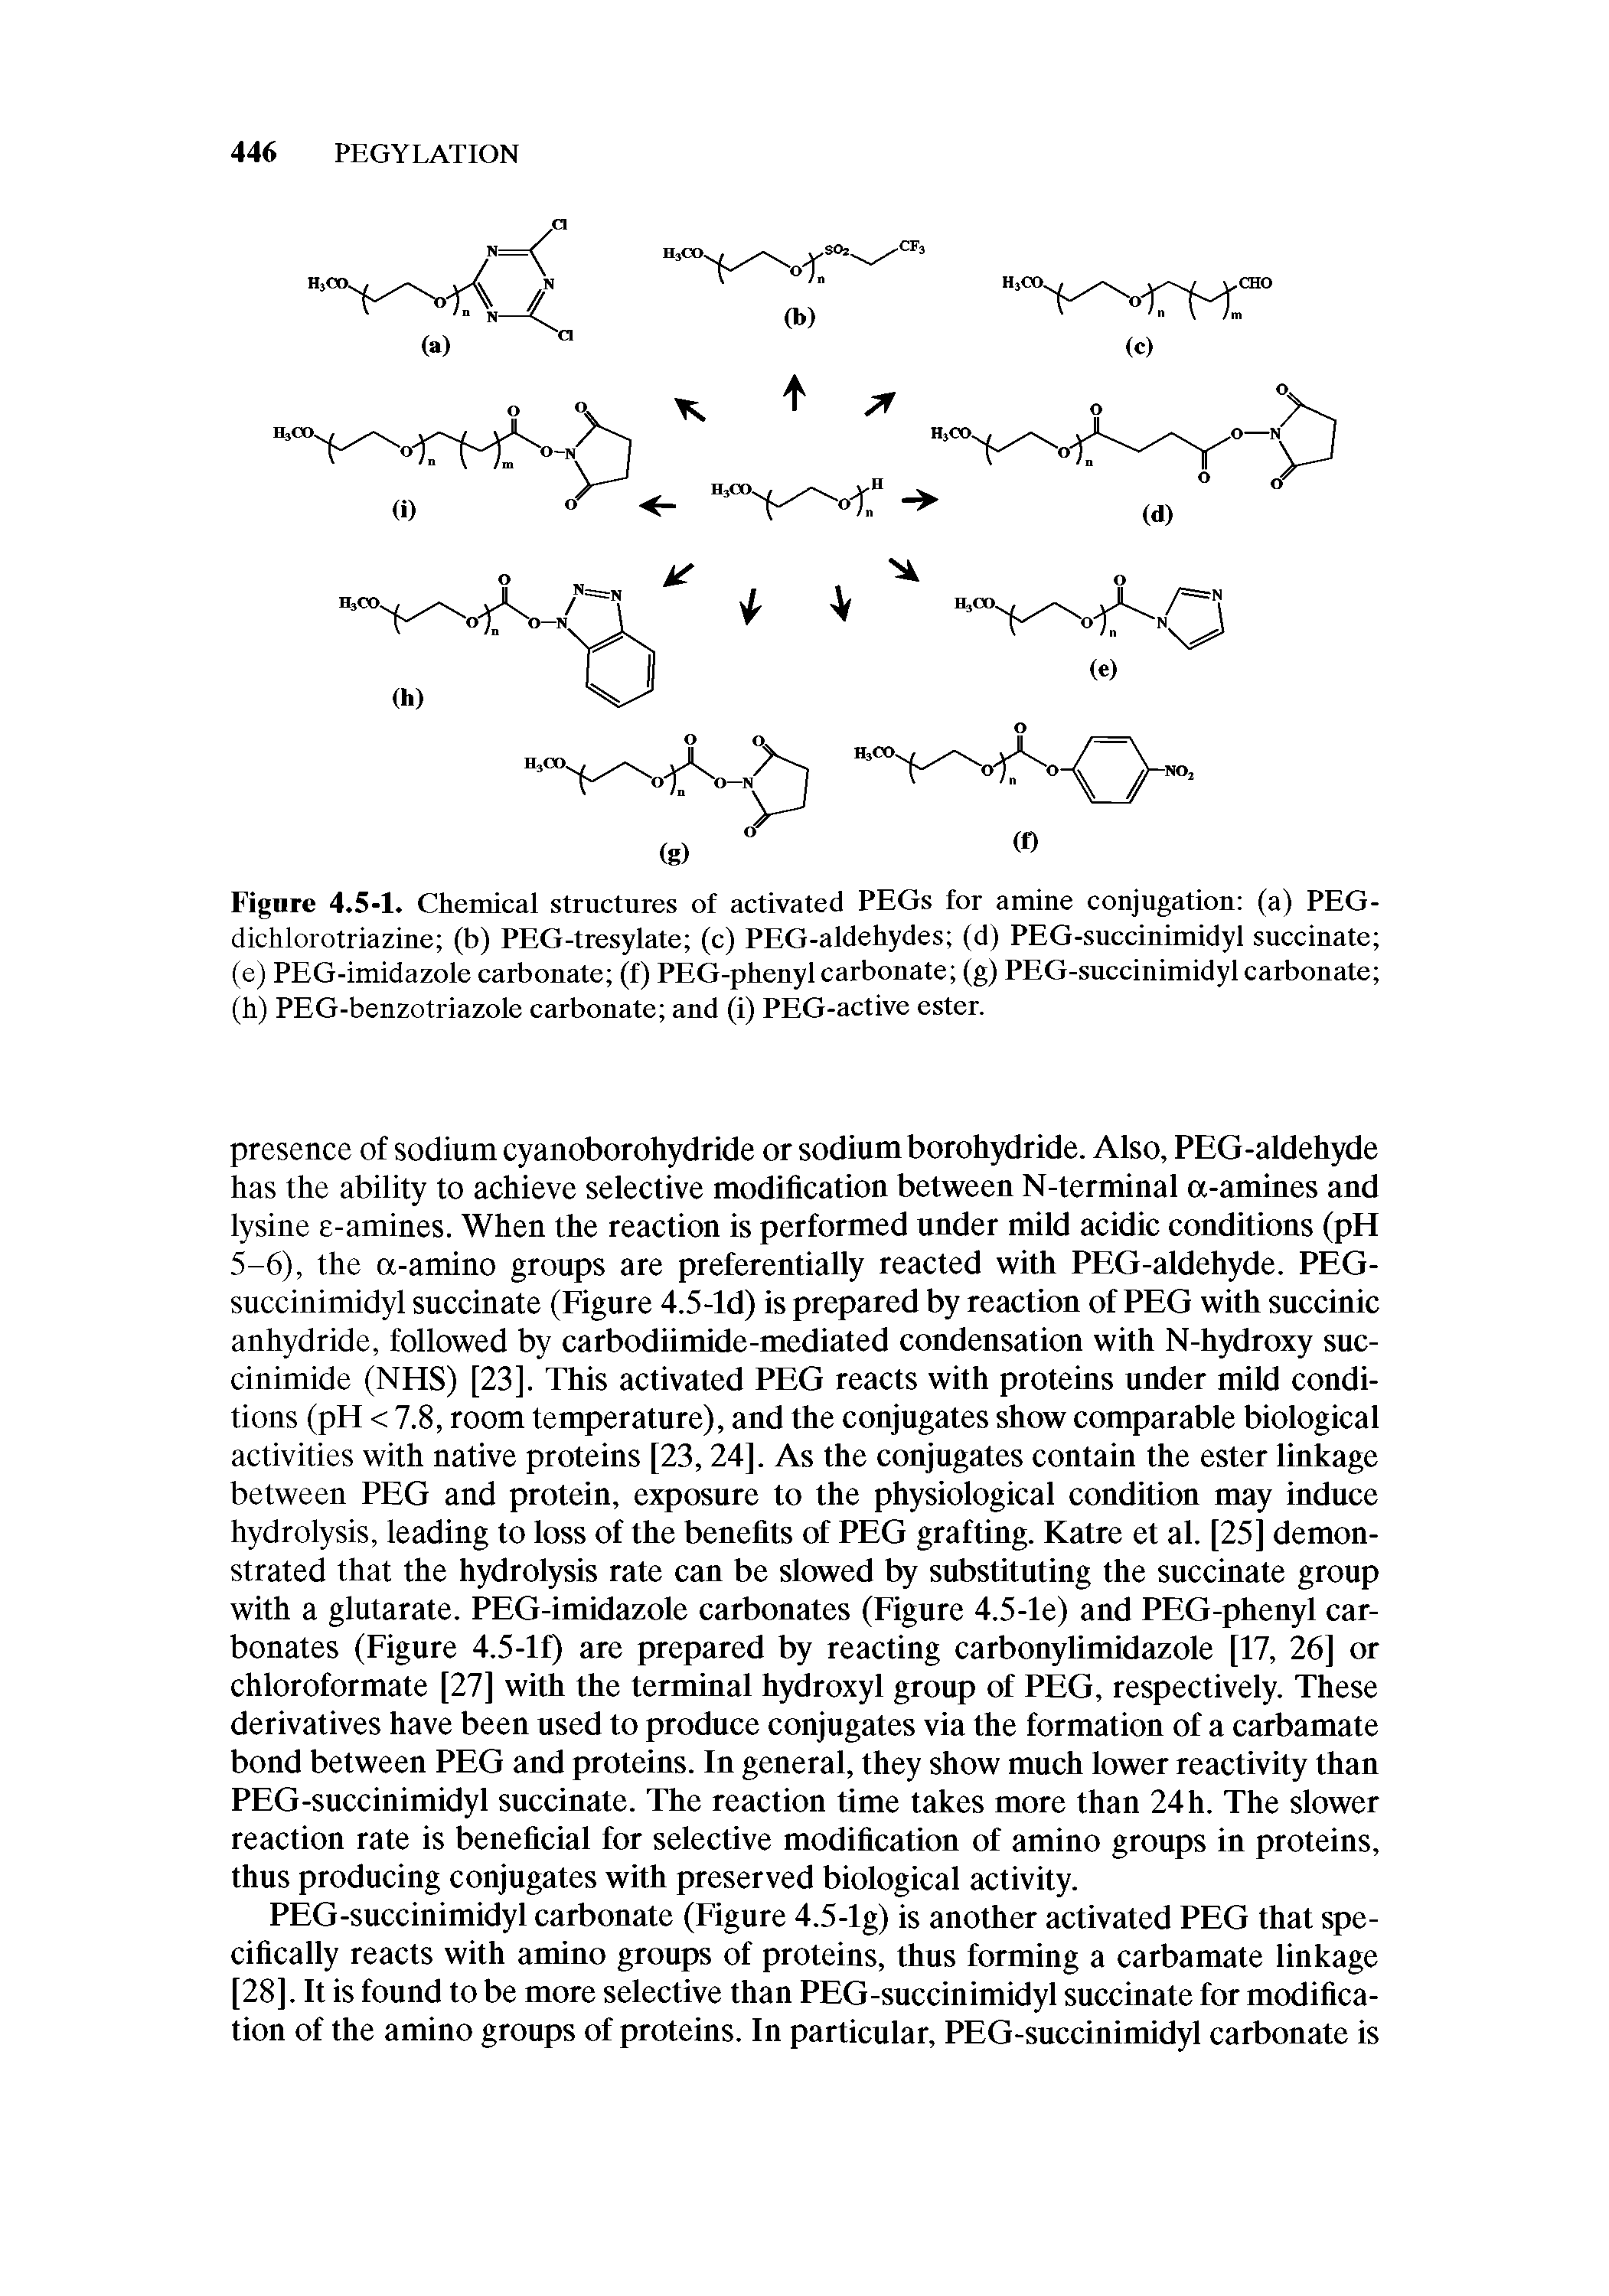 Figure 4.5-1. Chemical structures of activated PEGs for amine conjugation (a) PEG-dichlorotriazine (b) PEG-tresylate (c) PEG-aldehydes (d) PEG-succinimidyl succinate (e) PEG-imidazole carbonate (f) PEG-phenyl carbonate (g) PEG-succinimidyl carbonate (h) PEG-benzotriazole carbonate and (i) PEG-active ester.